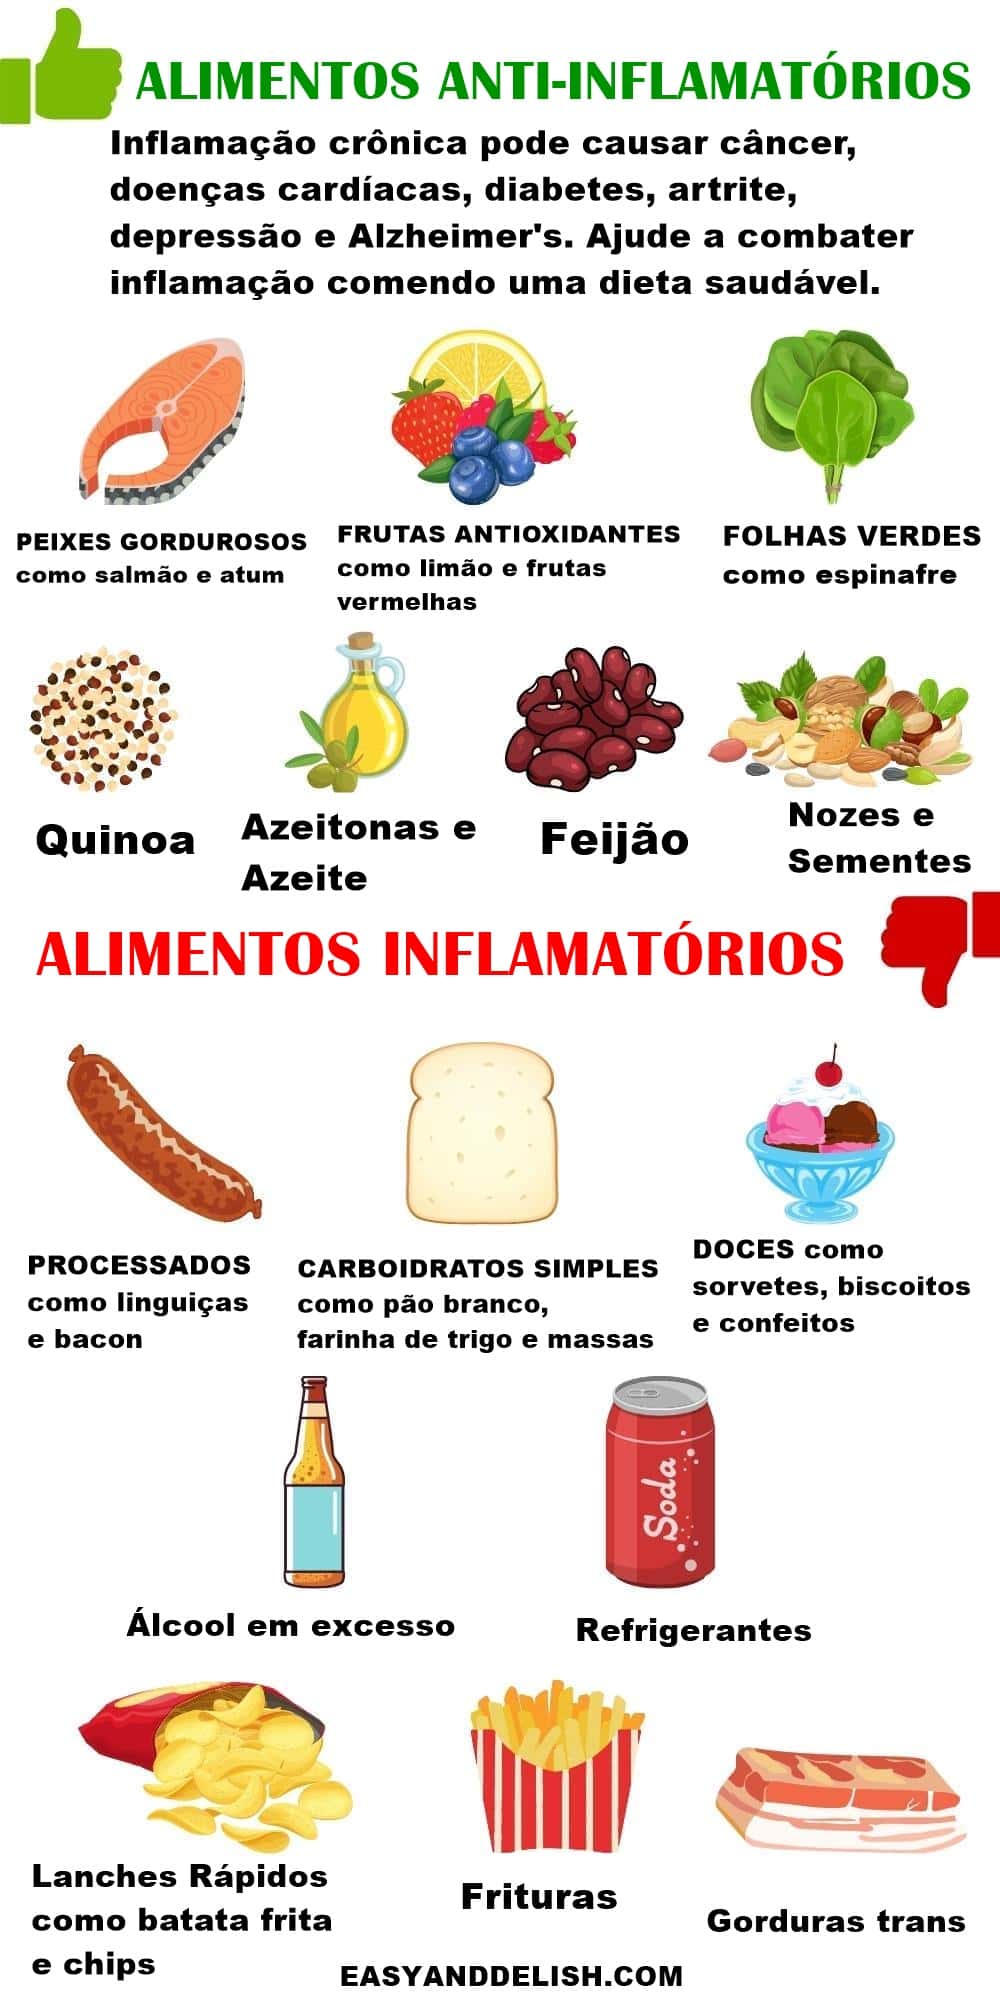 grafico mostrando alimentos anti-inflamatorios e alimentos inflamatorios.